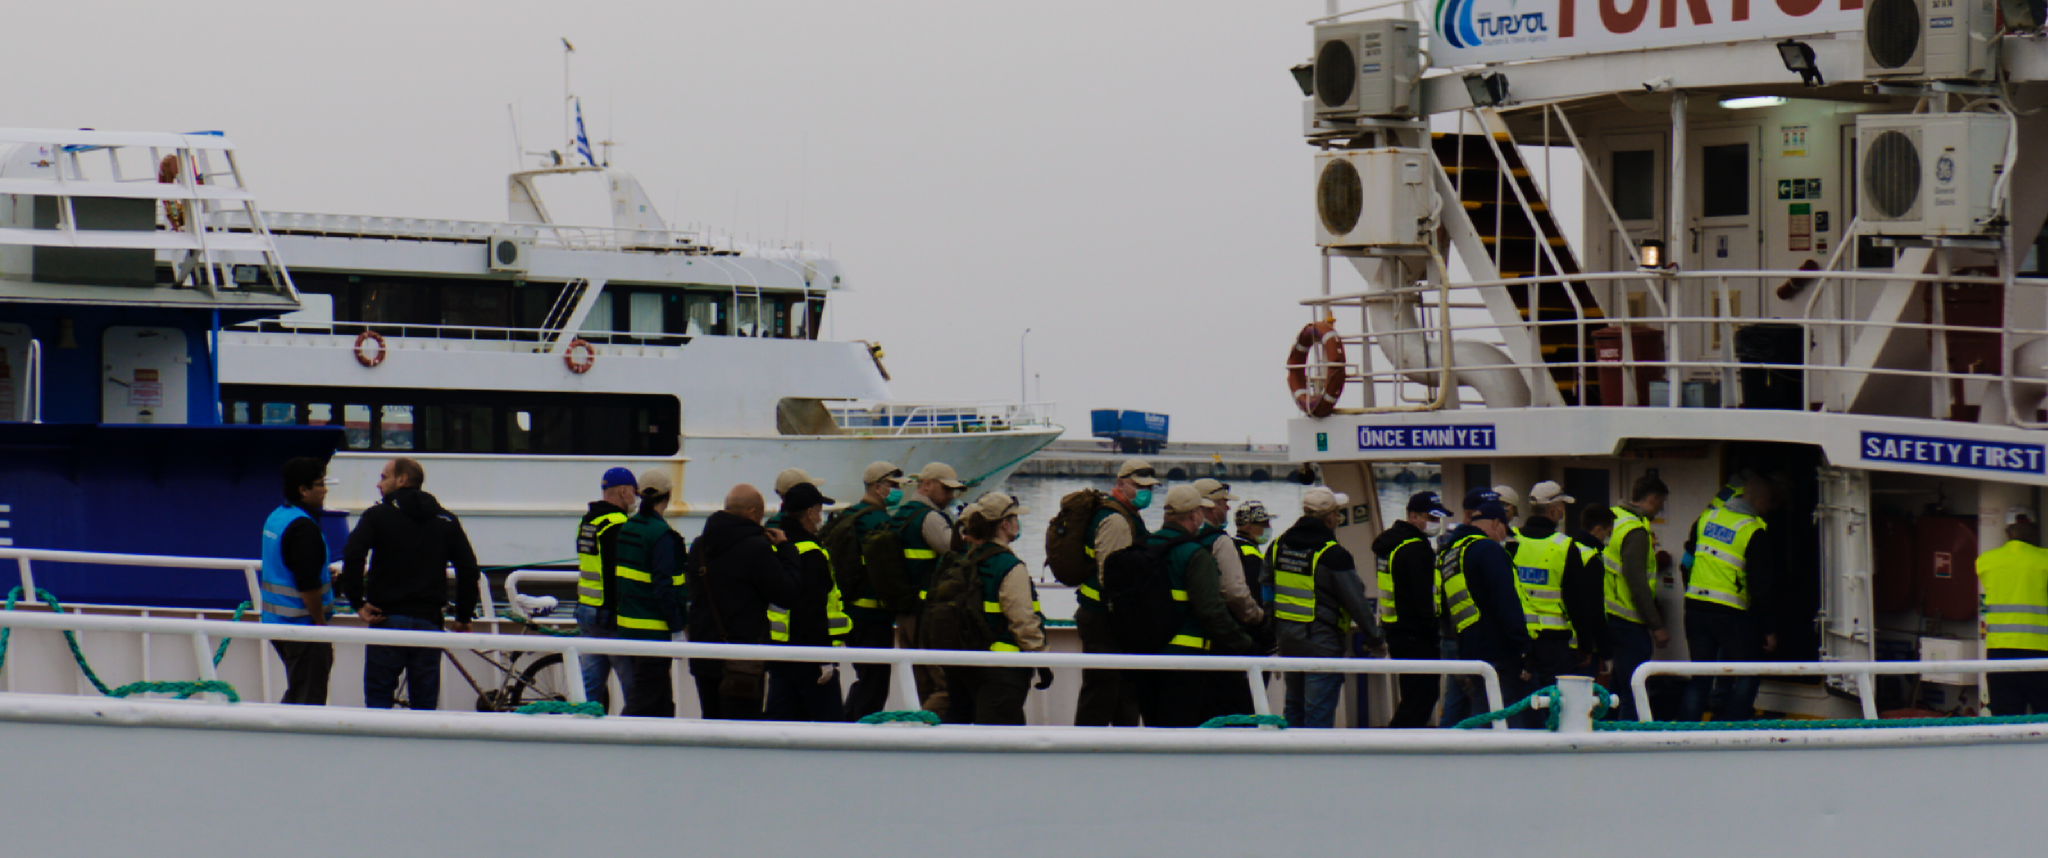 Officials Escort Refugees onto Boat for Deportation to Turkey